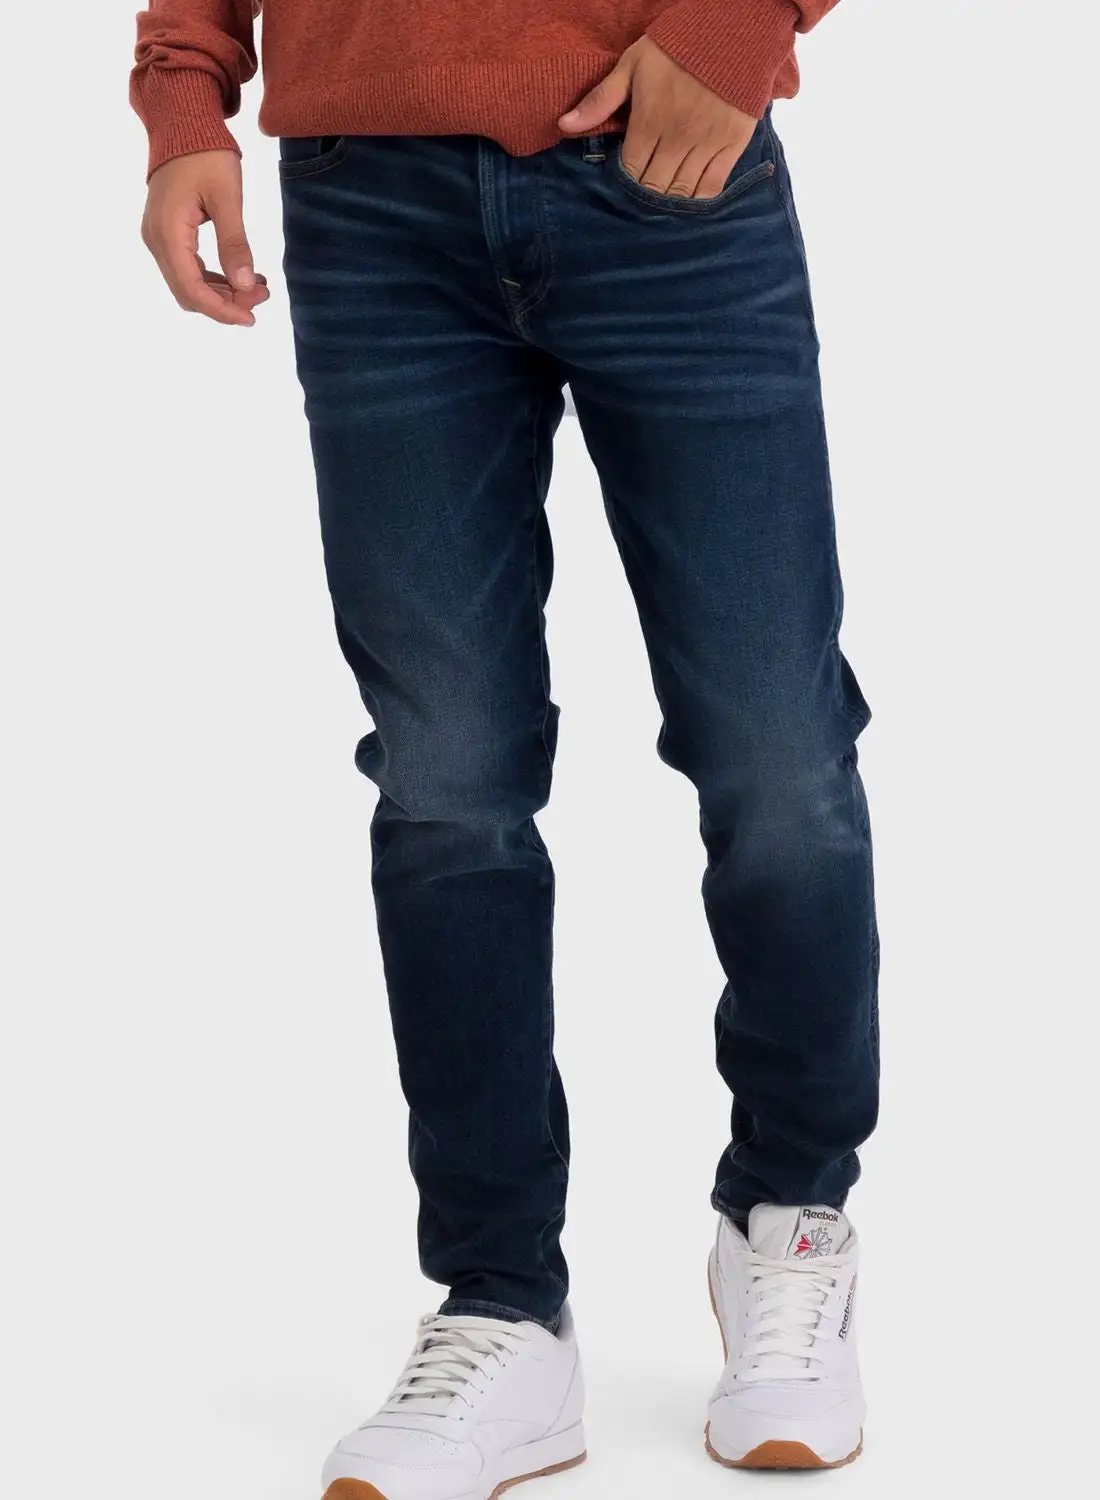 American Eagle Dark Wash Skinny Fit Jeans